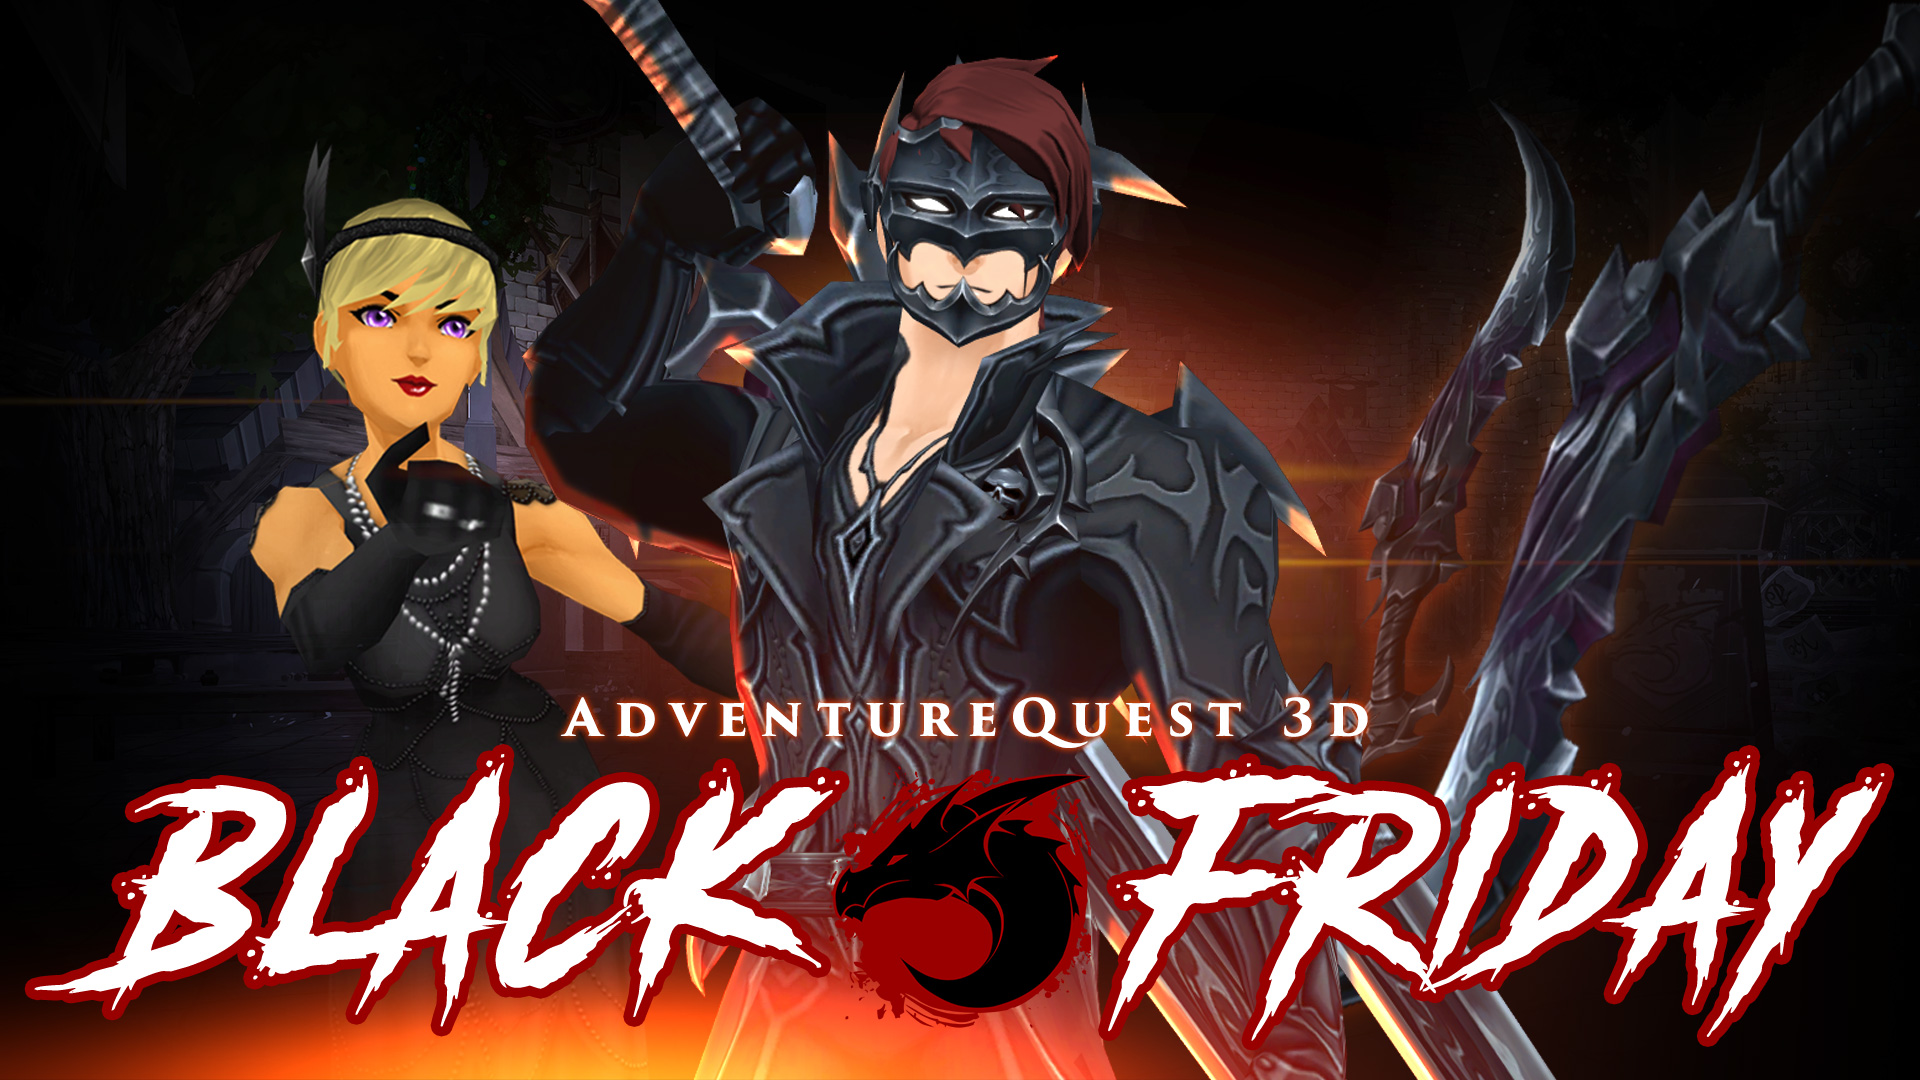 Black Friday Arrived Early - Adventure Quest 3D, Cross Platform MMORPG